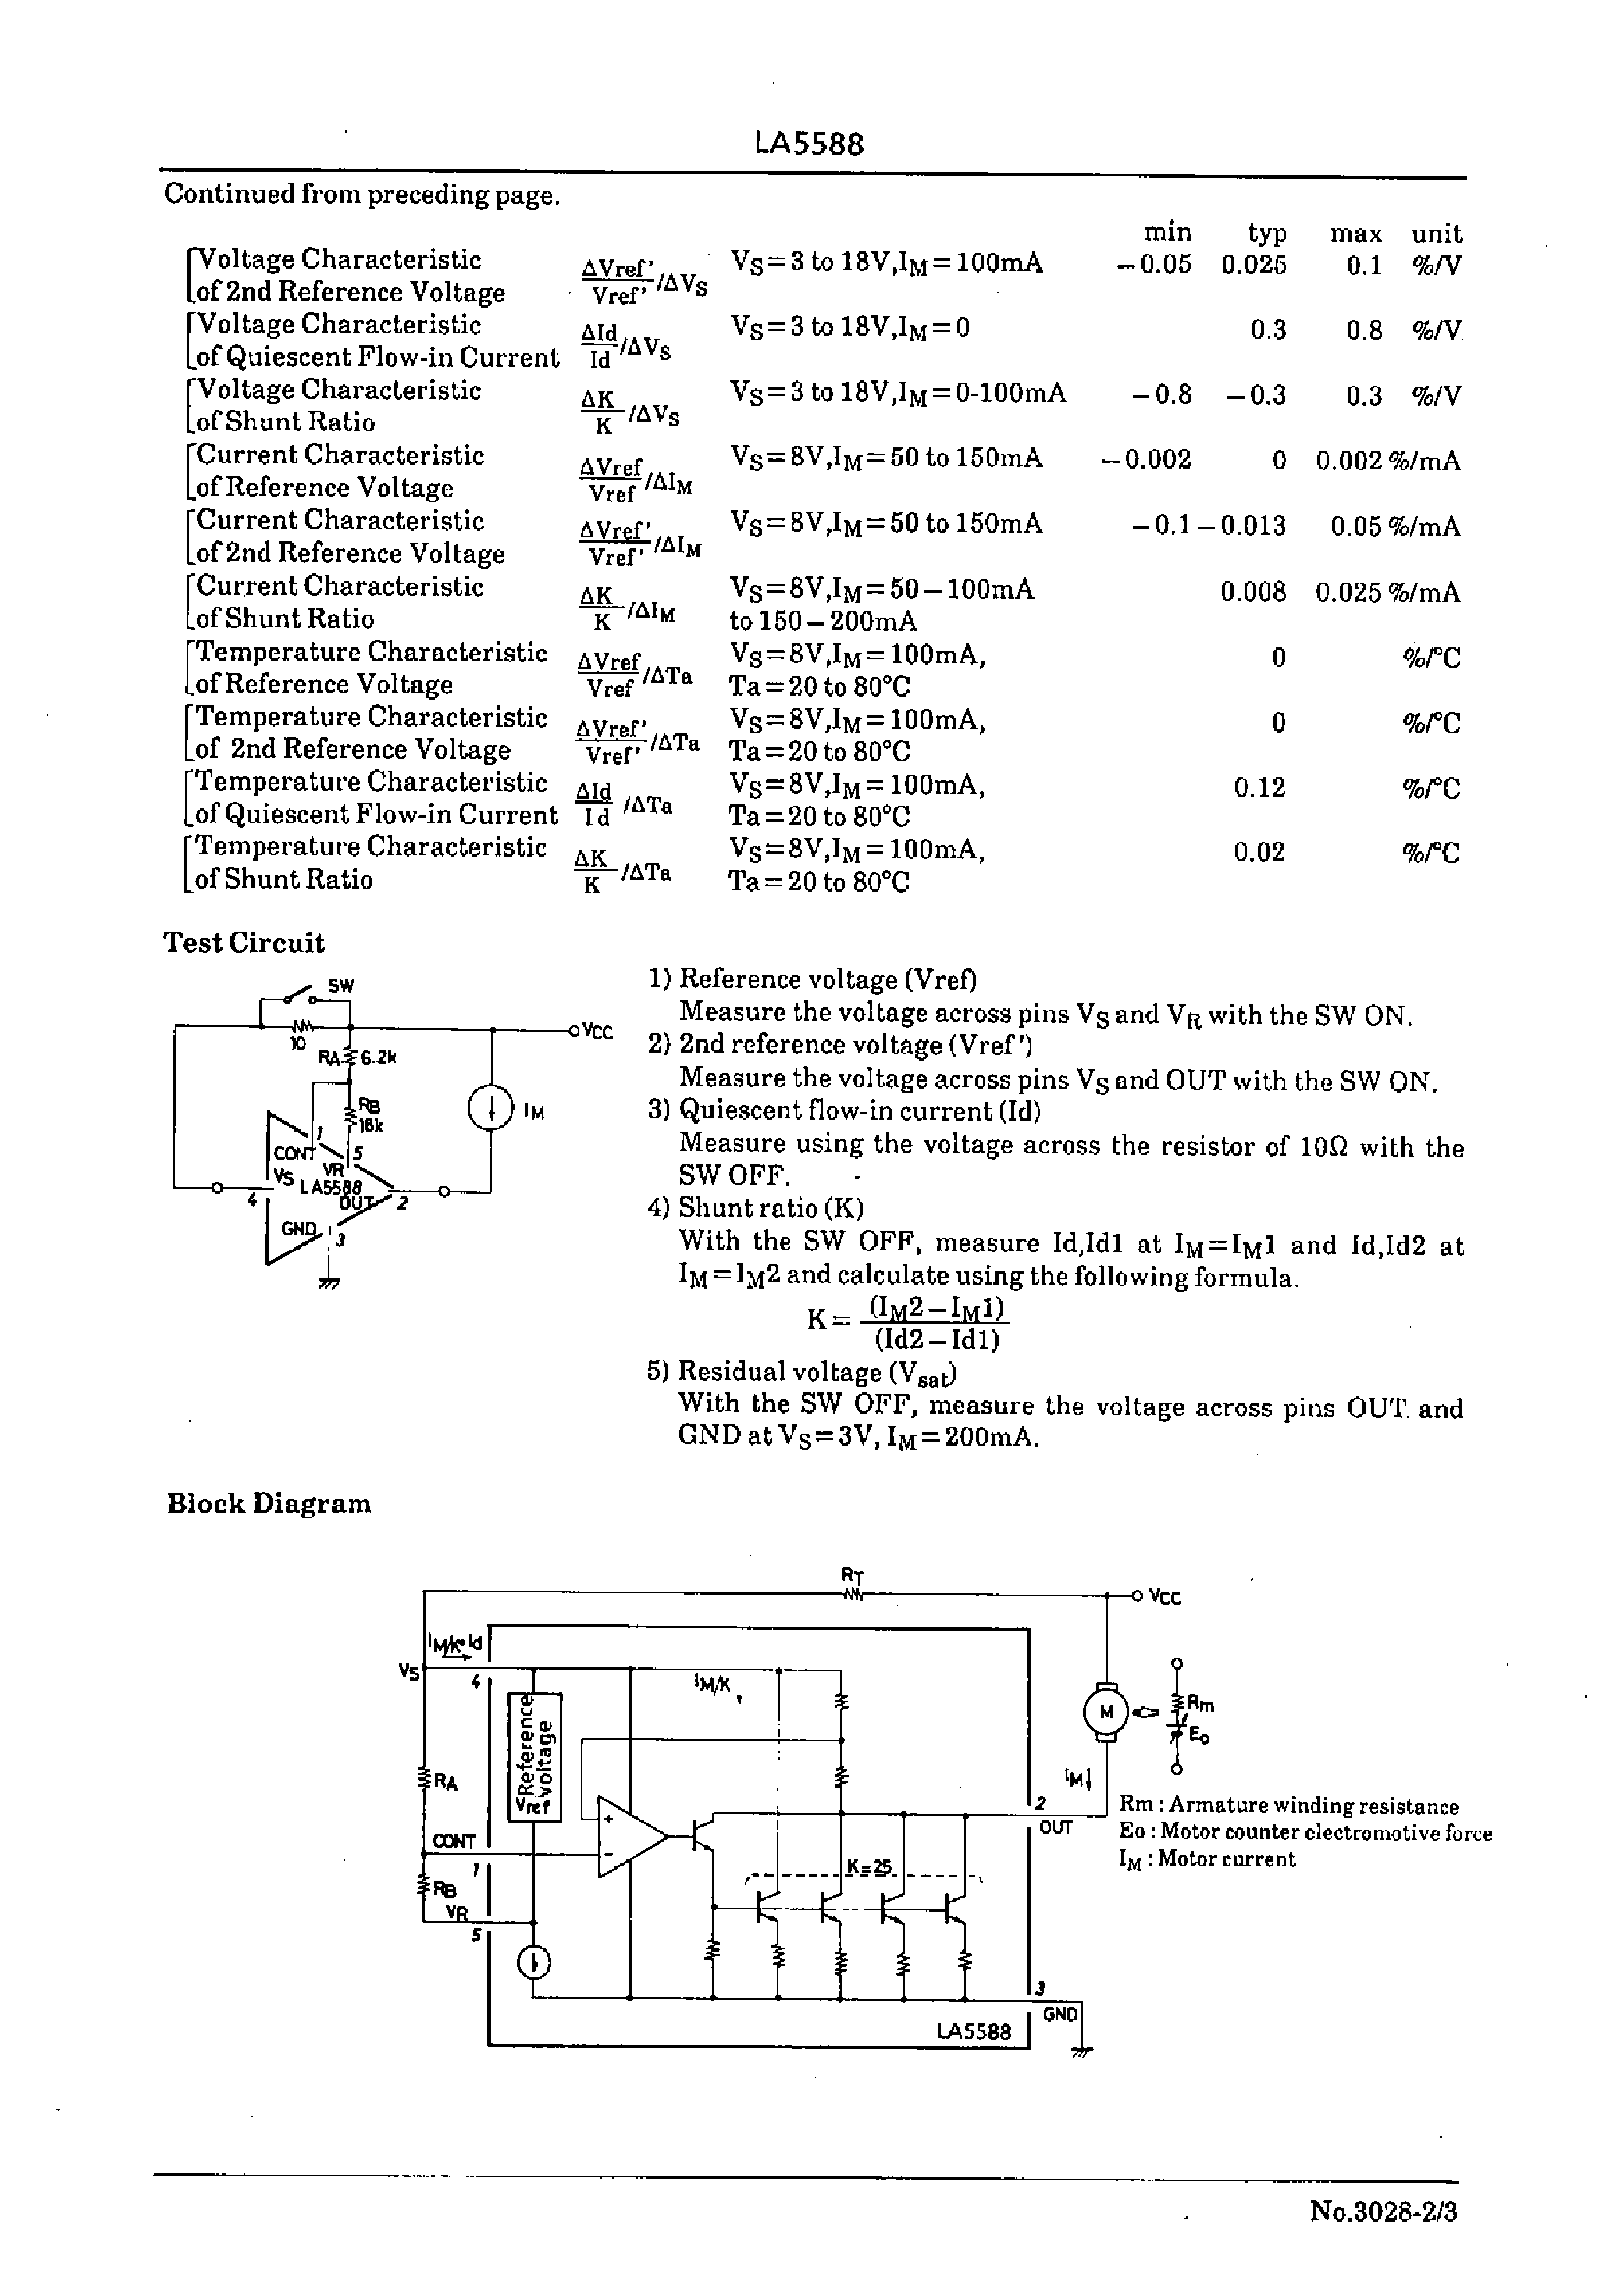 Даташит LA5588 - General-Purpose Compact DC Moter Speed Controller страница 2